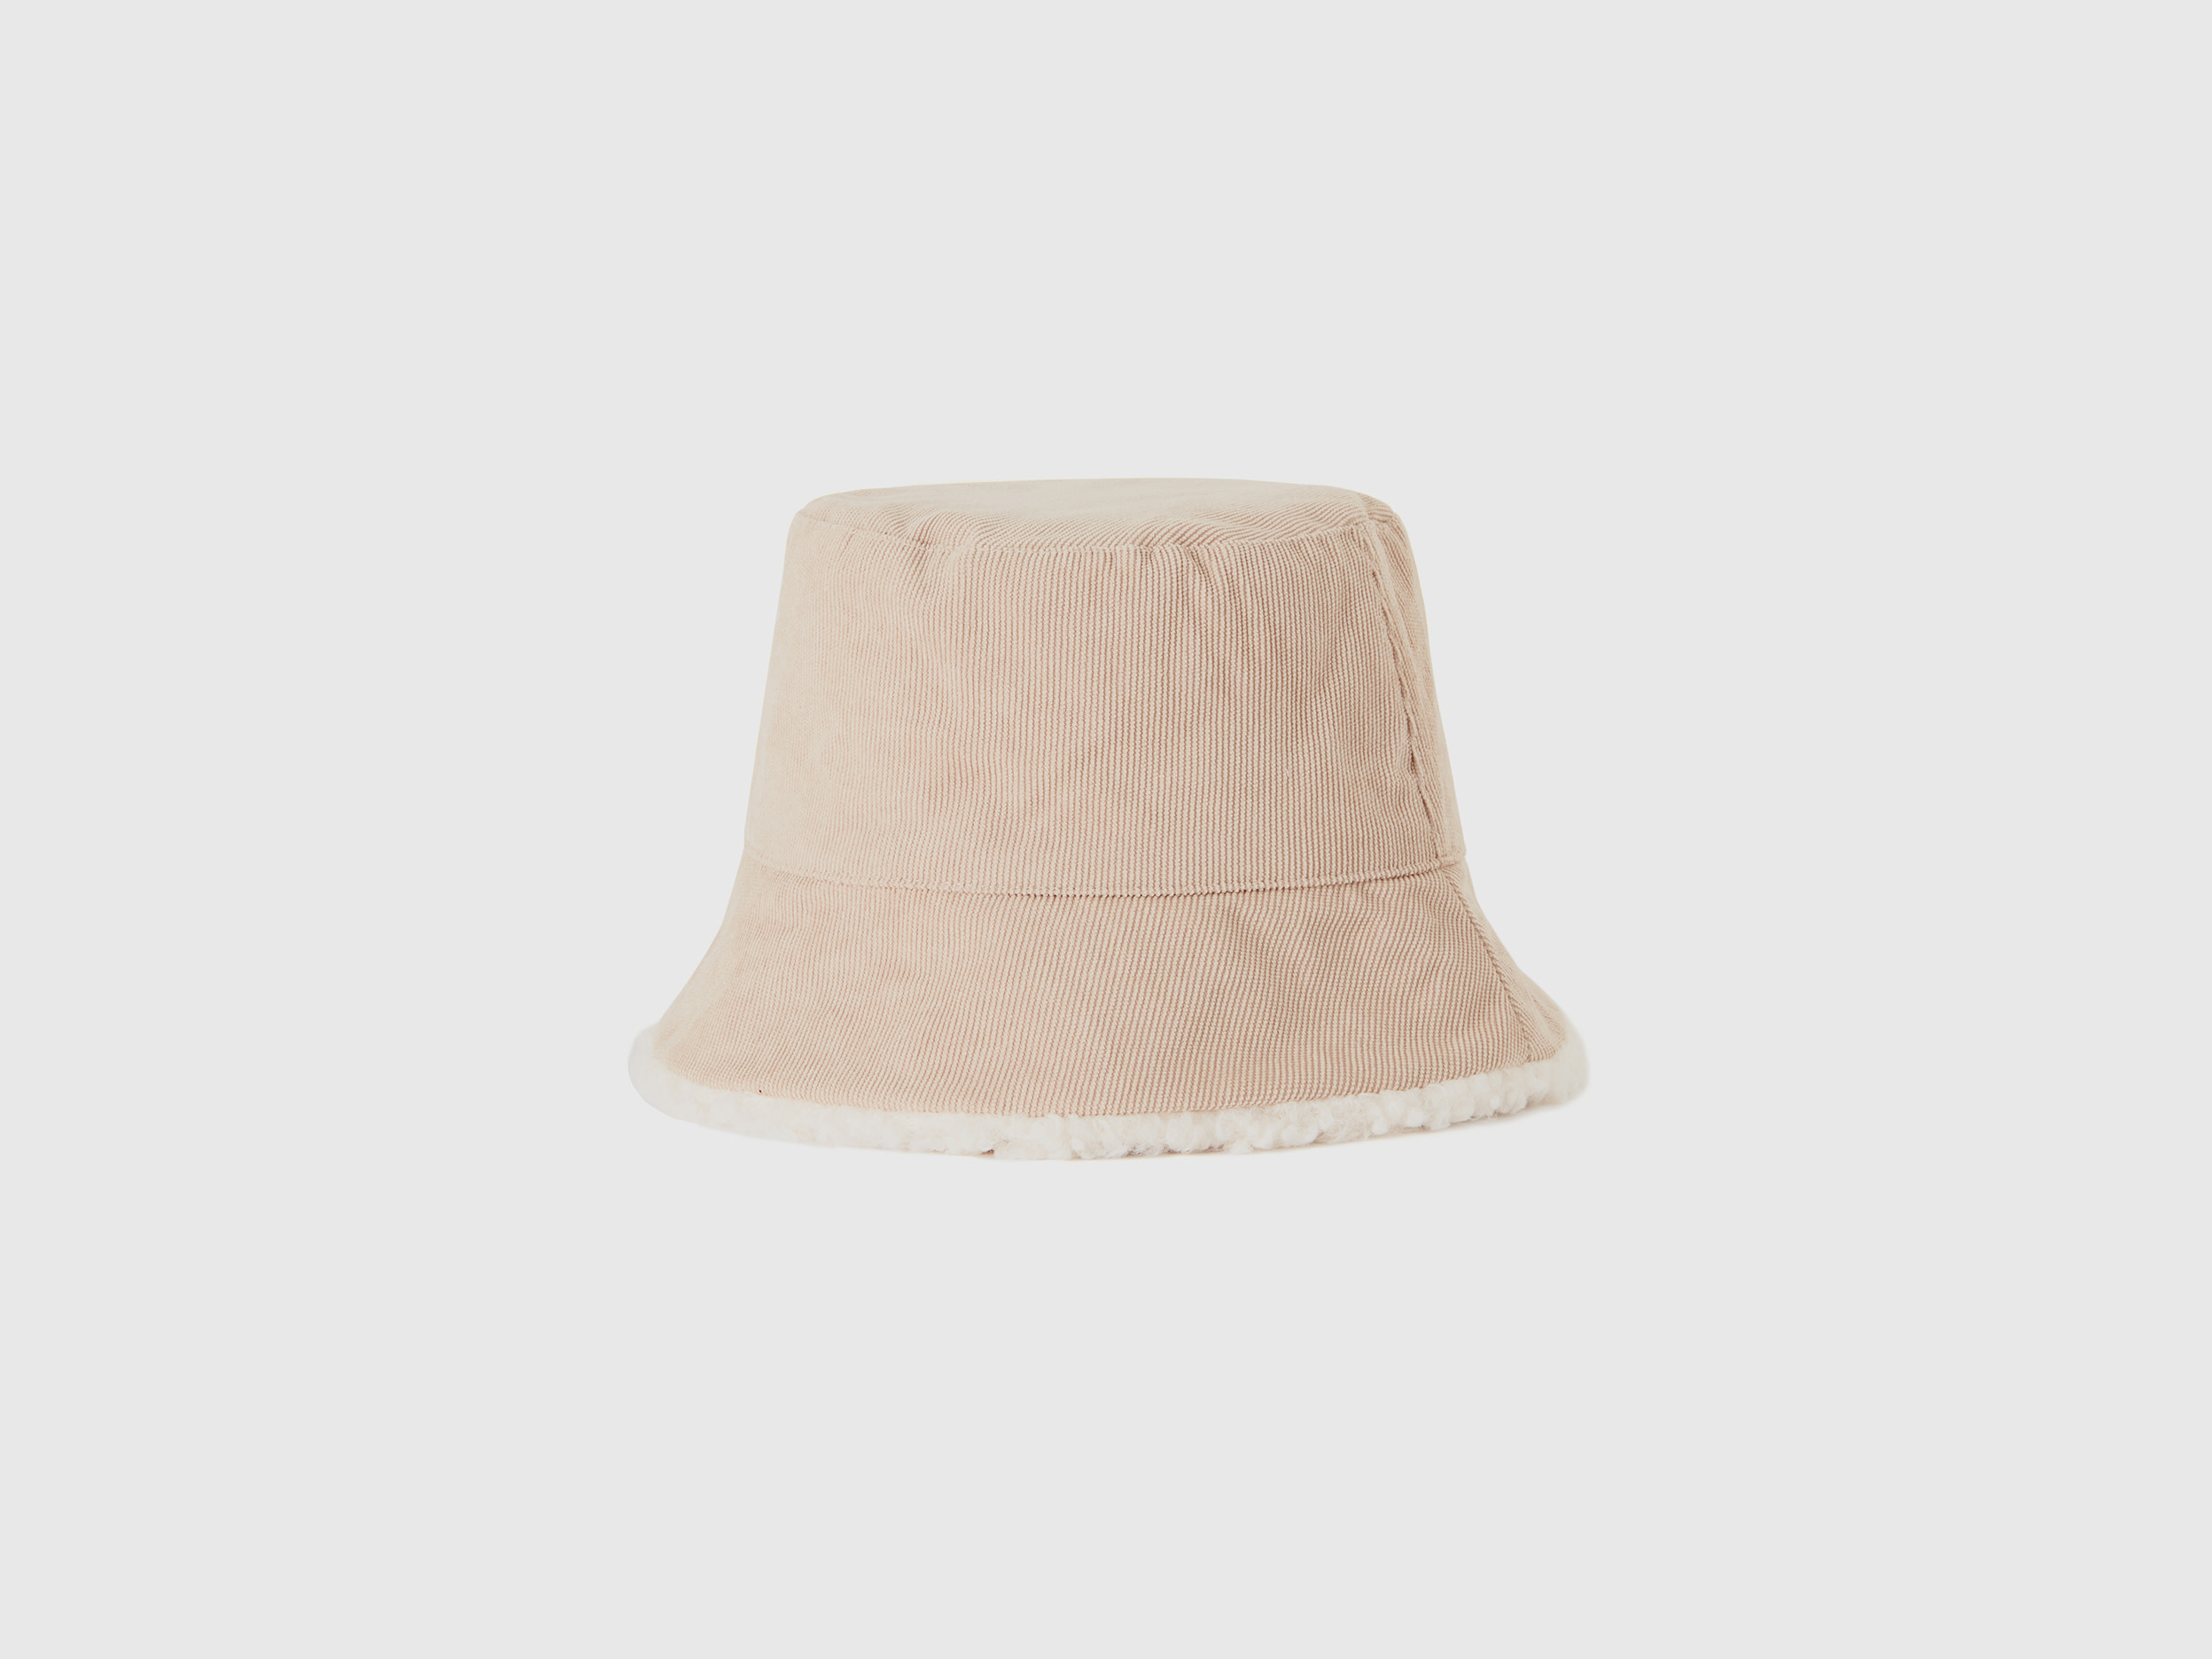 Benetton, Reversible Bucket Hat, size M, Creamy White, Women